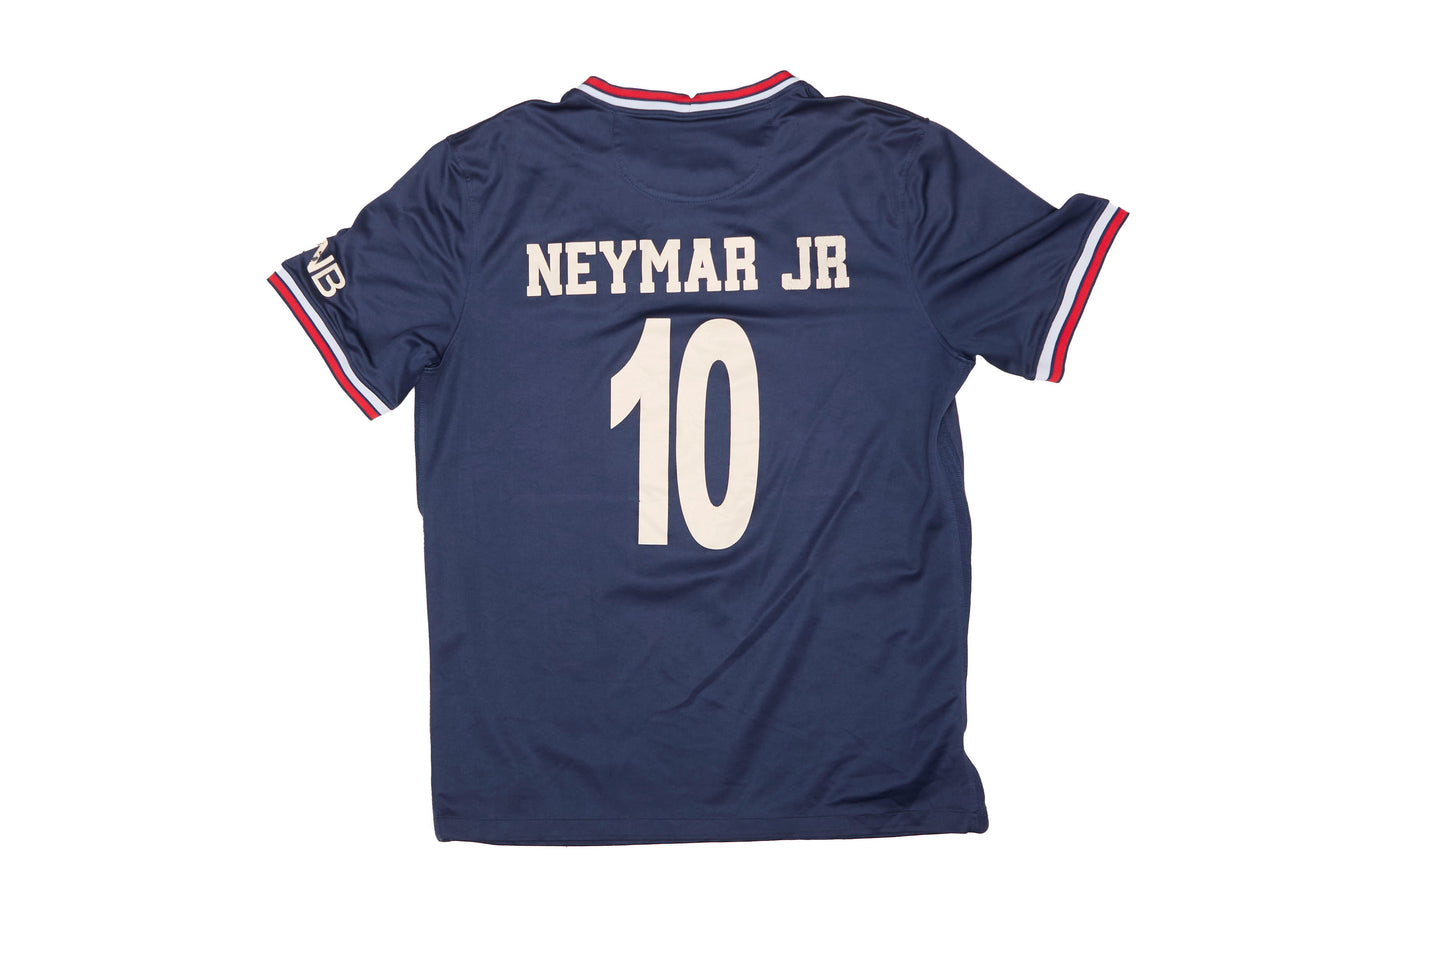 Mens PSG "Neymar Jr" Shirt - L